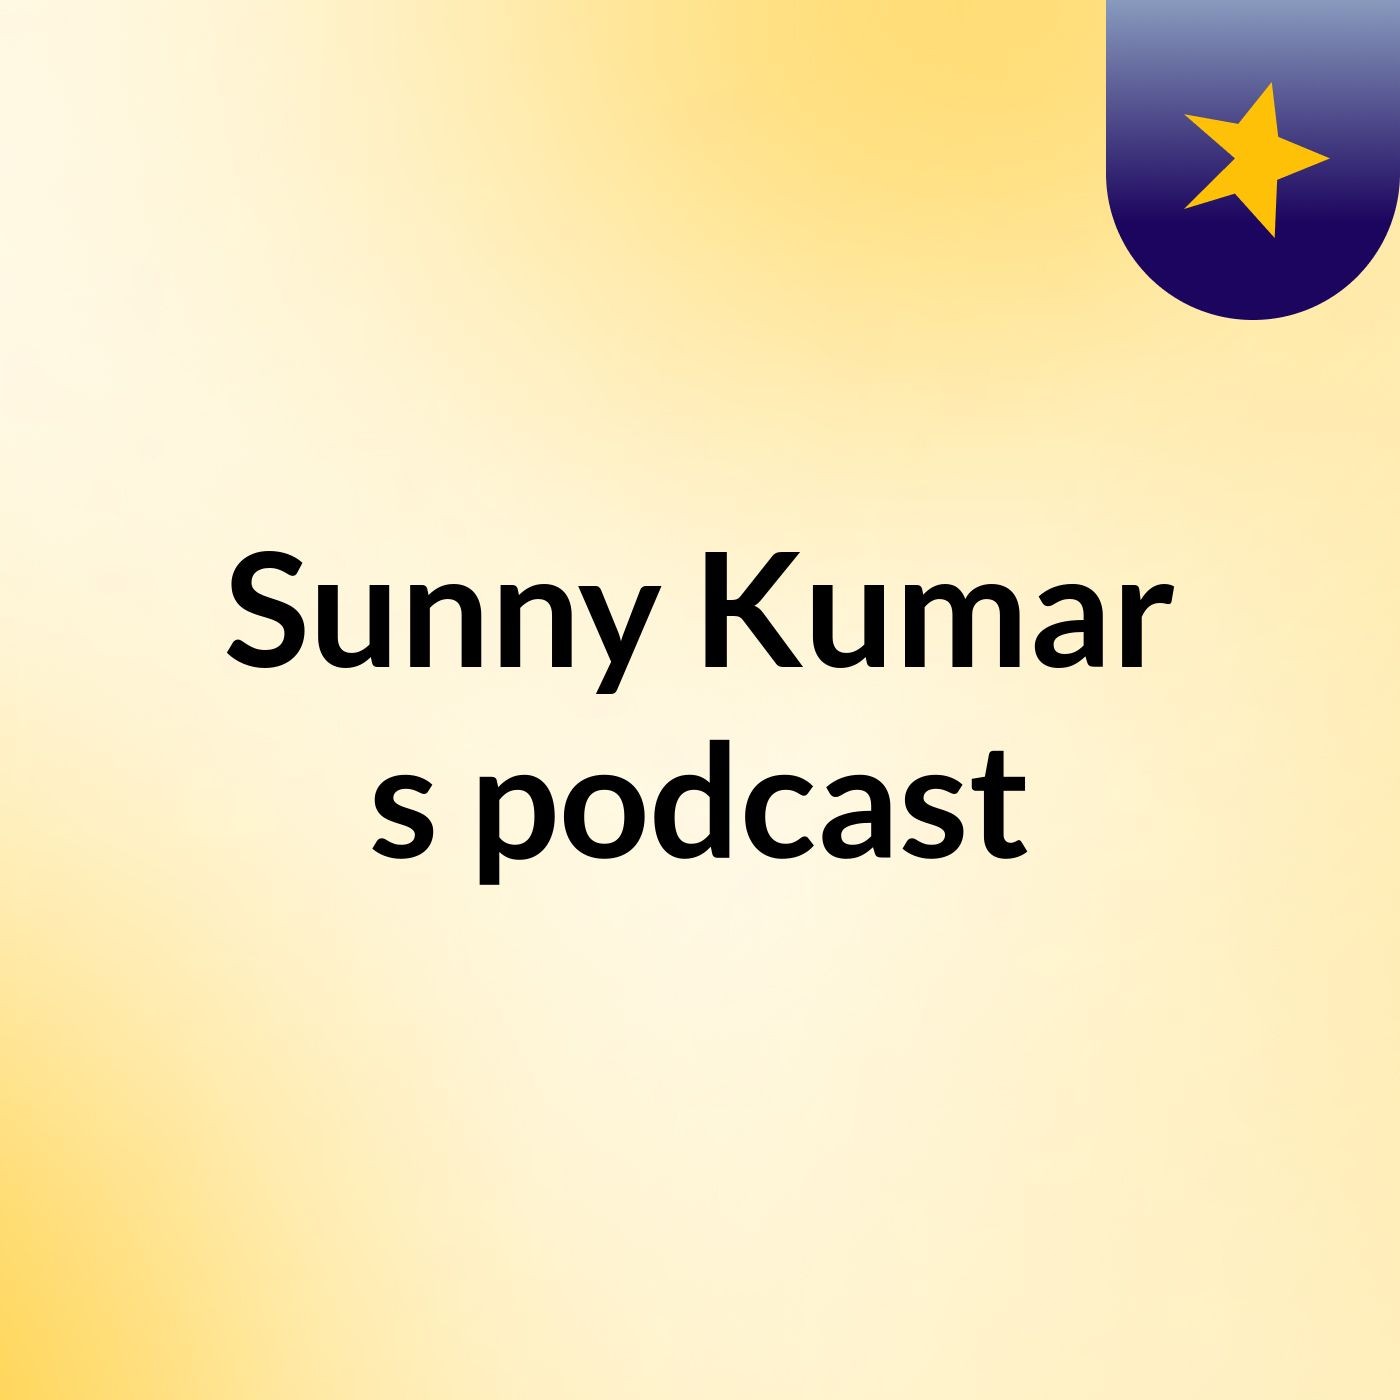 Episode 5 - Sunny Kumar's podcast